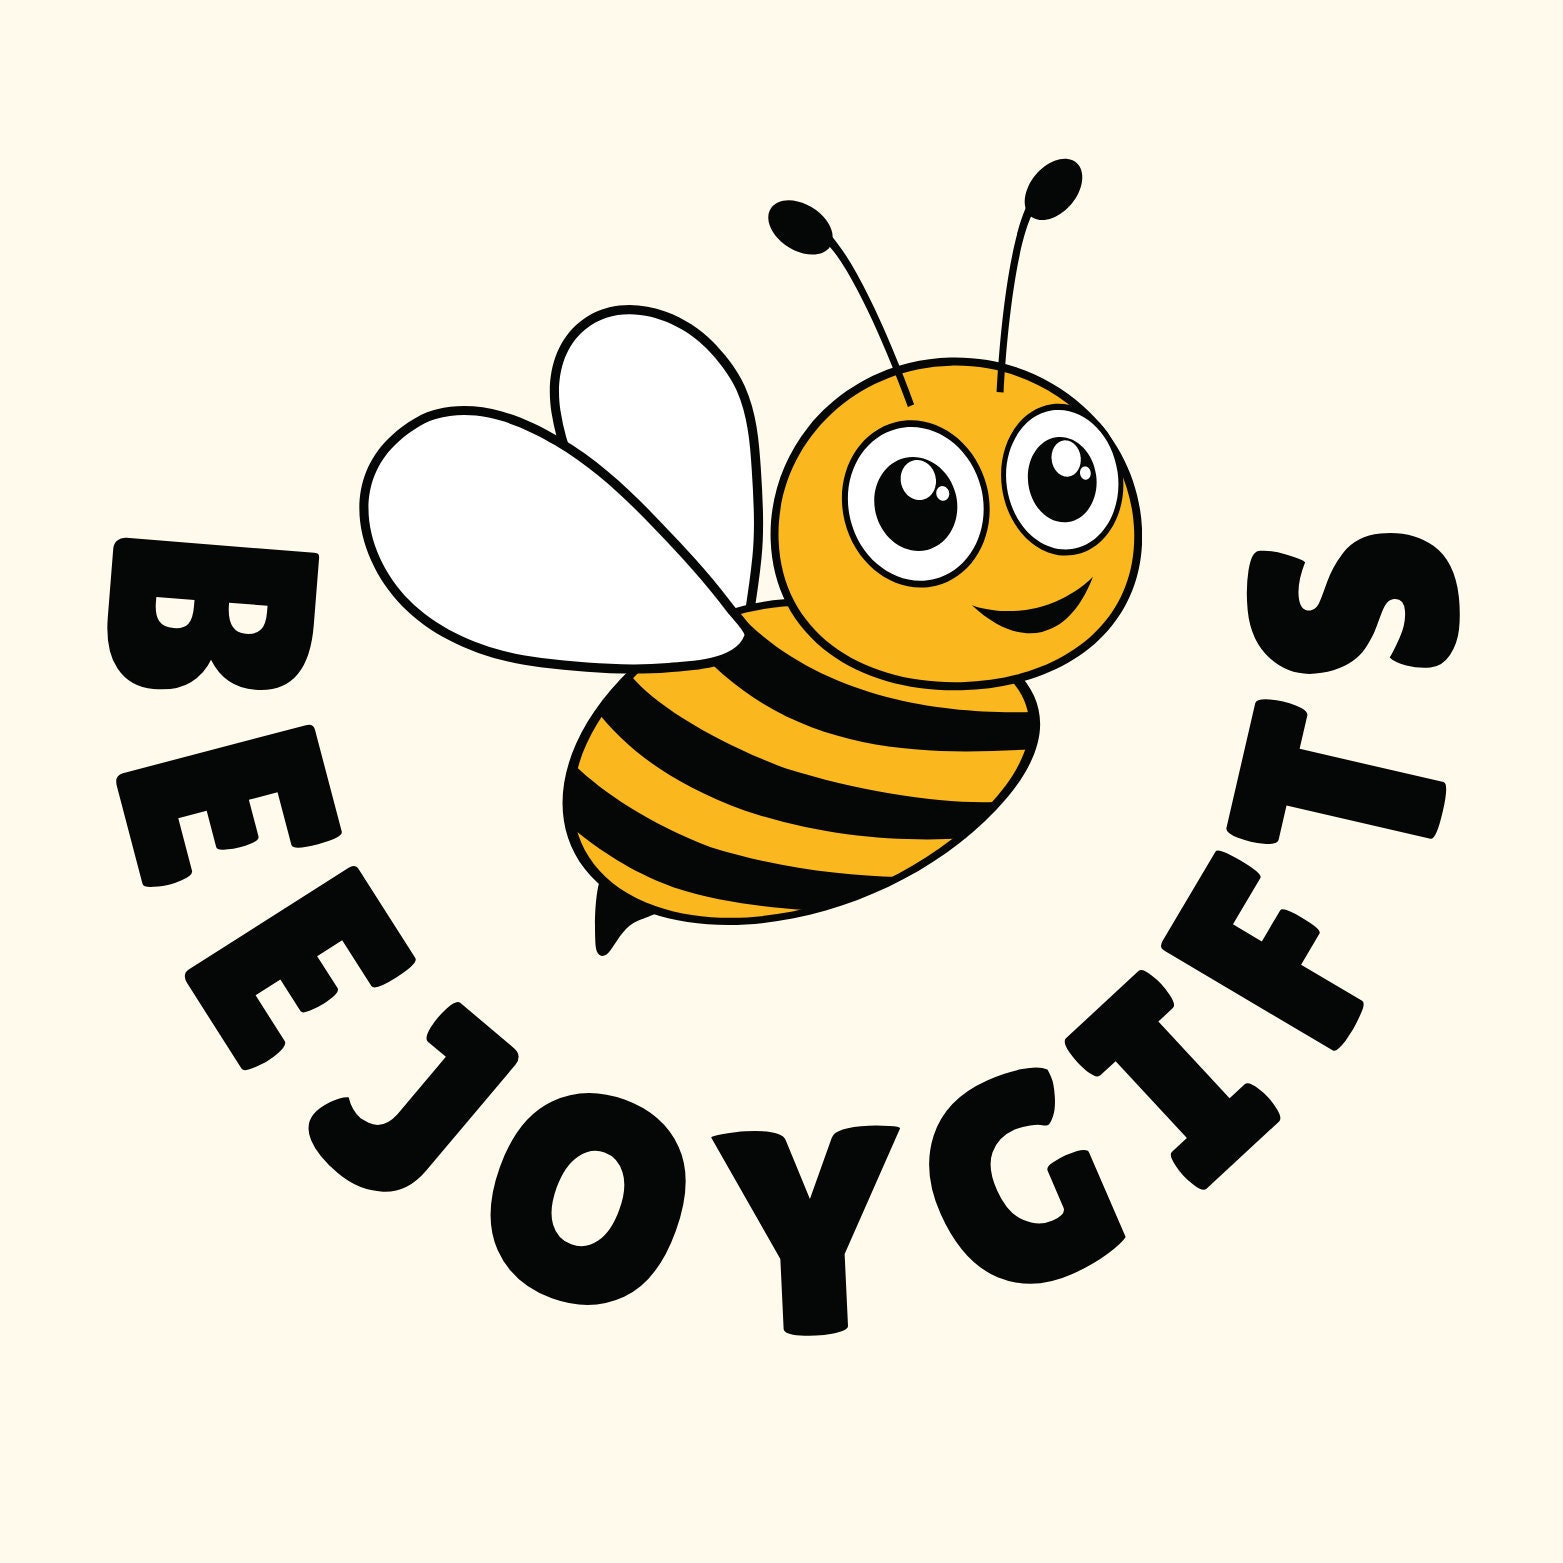 GENEMA Bee Happy Keychain Bee Jewelry Bee Gifts for Bee Lovers Beekeepers  and Teachers 